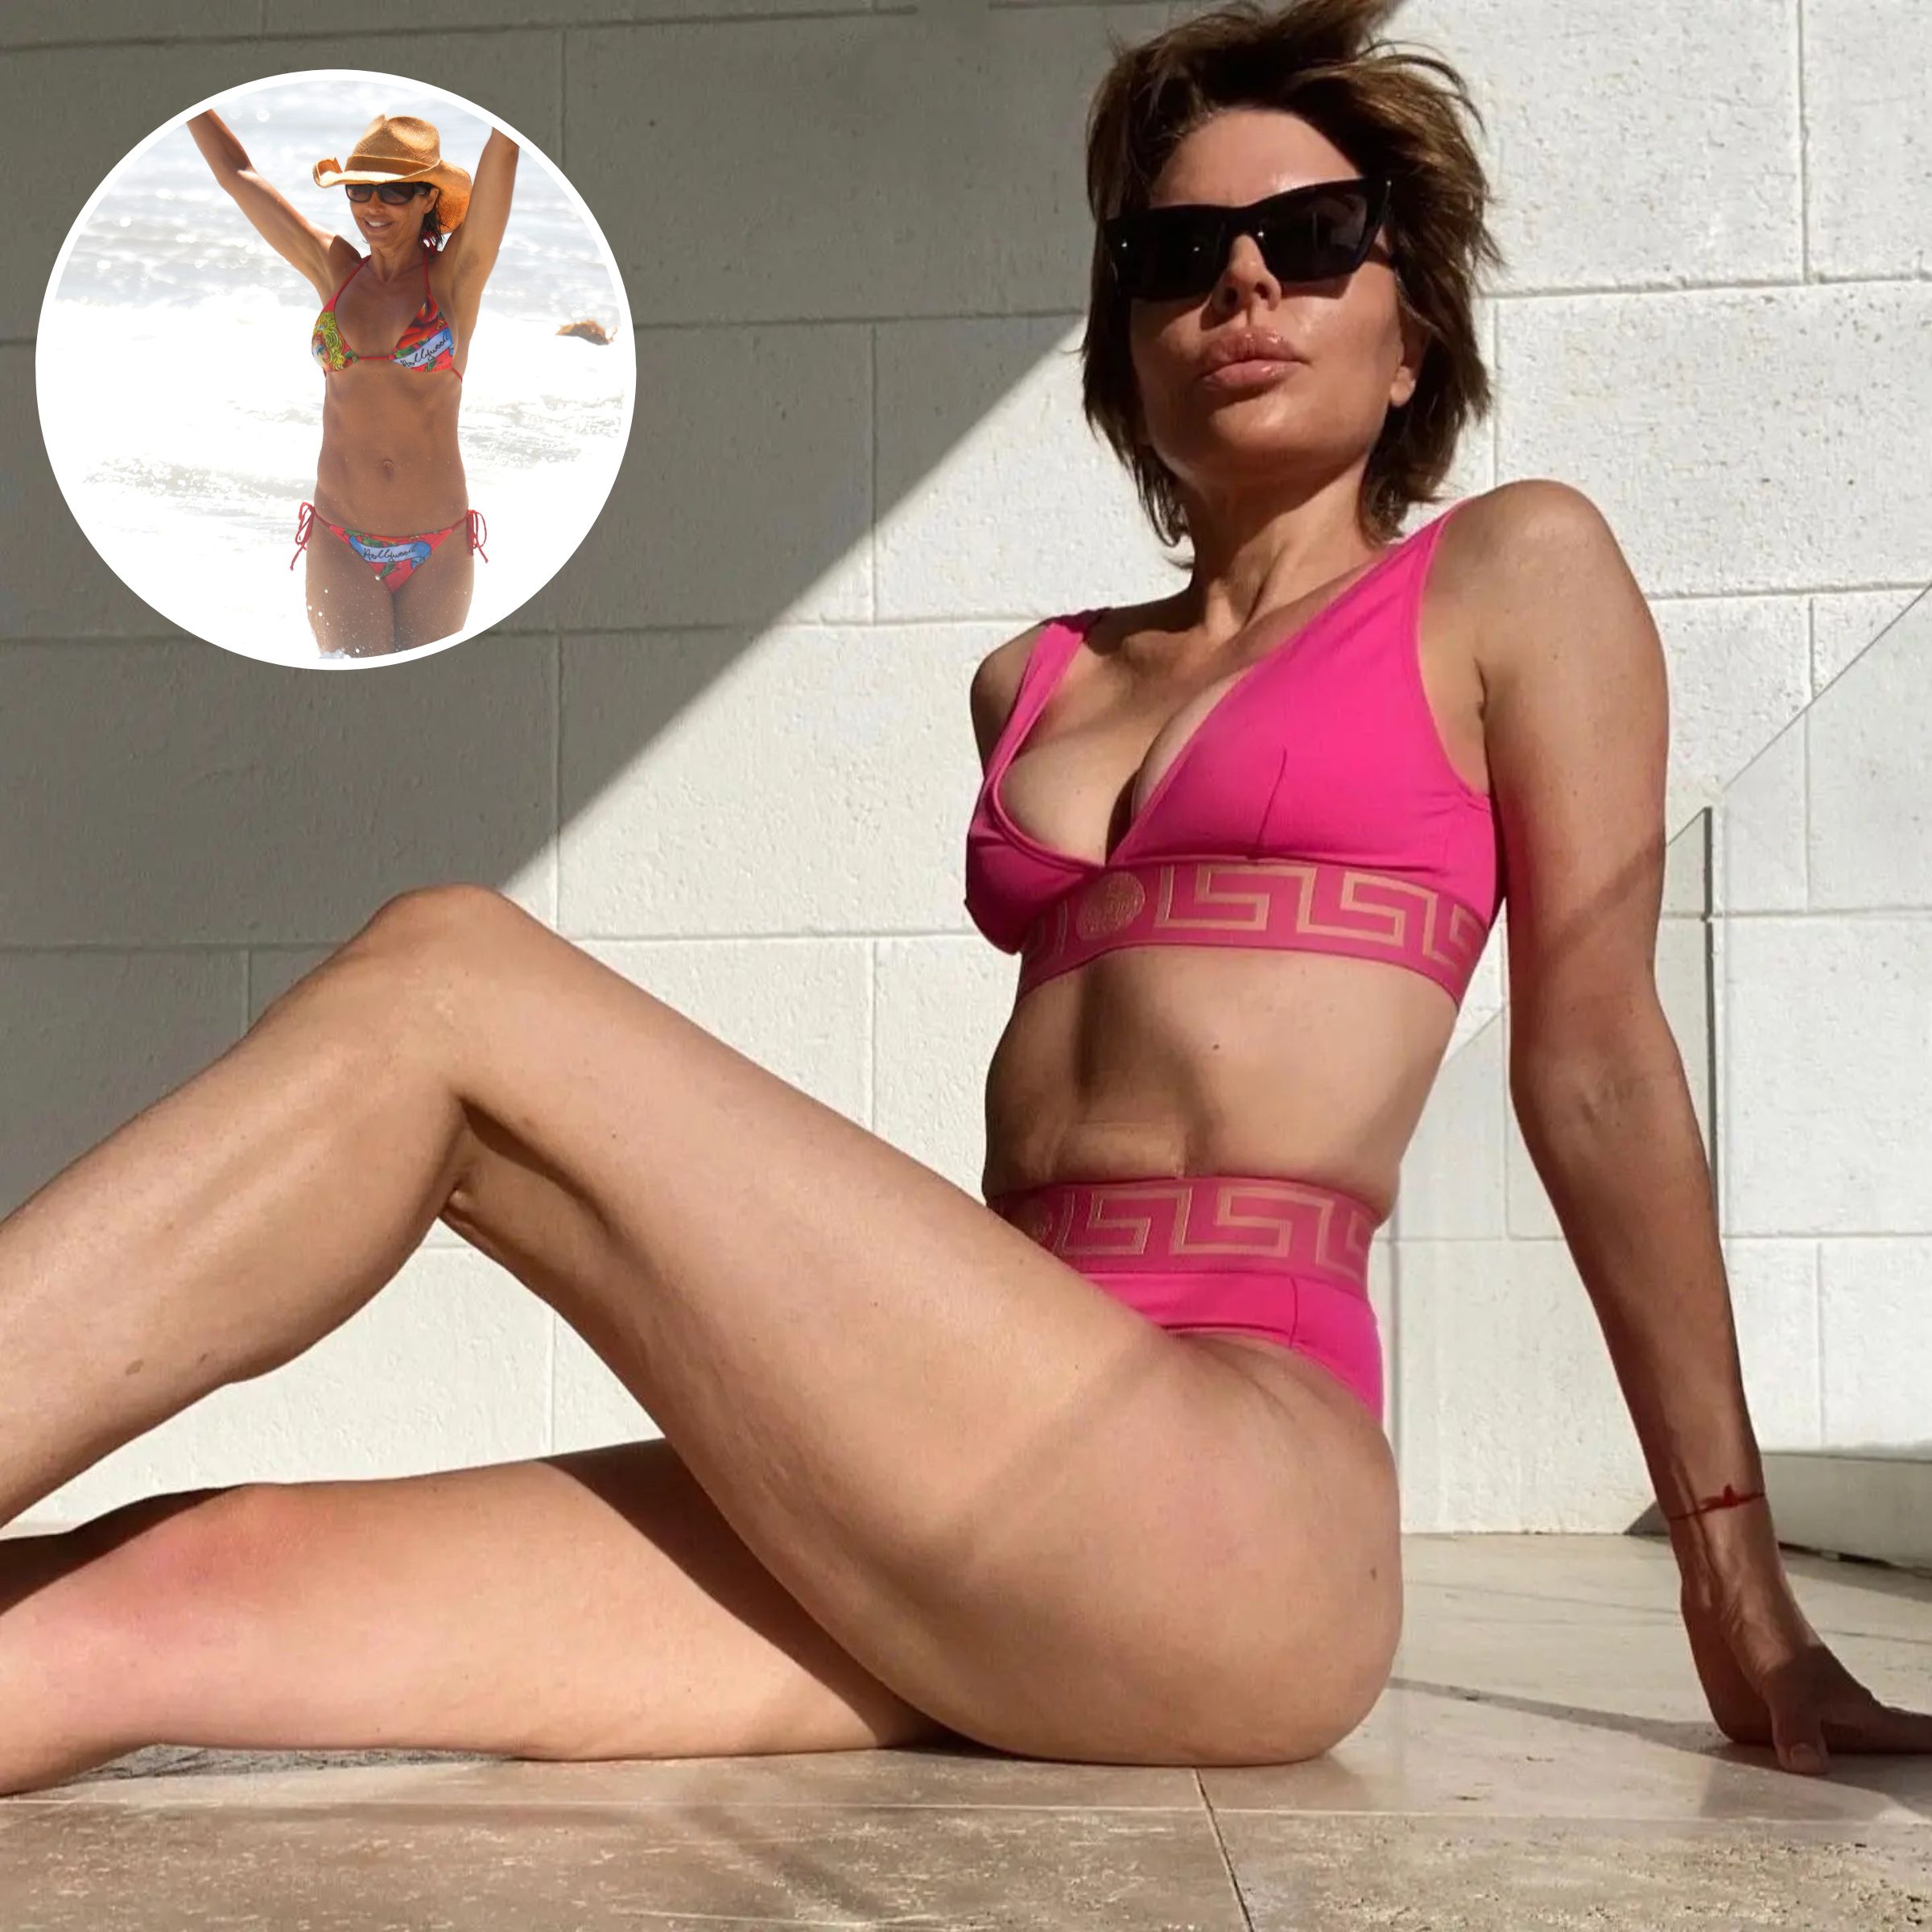 Lisa Rinna Porn - Lisa Rinna's Bikini Photos: Her Hottest Swimsuit Looks